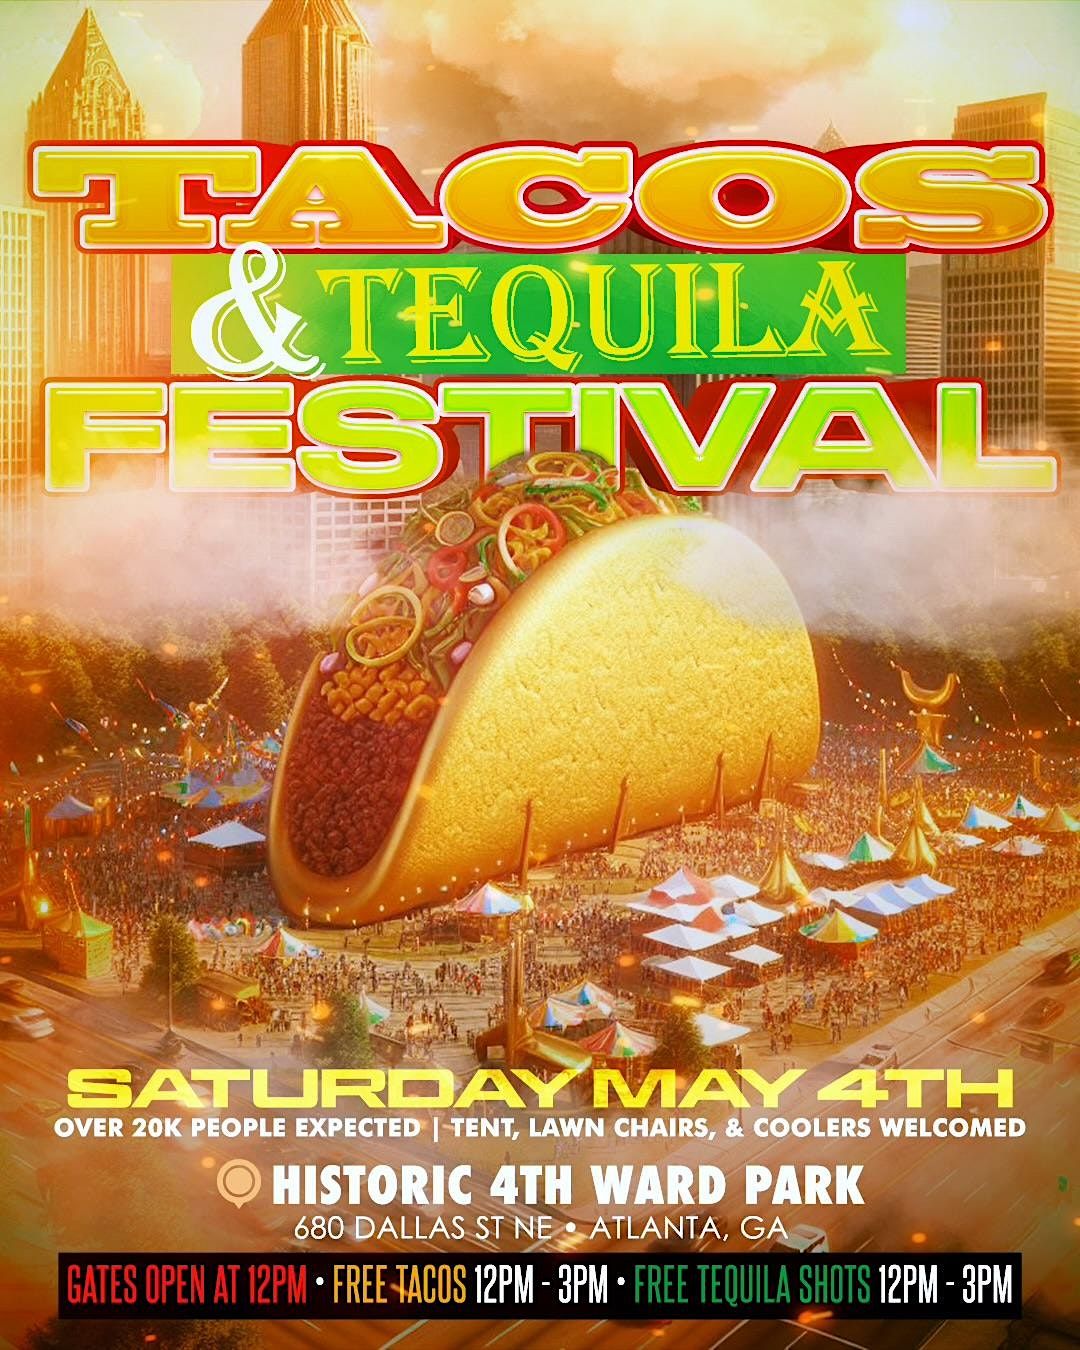 Tacos & Tequila Fest (Atlanta) was